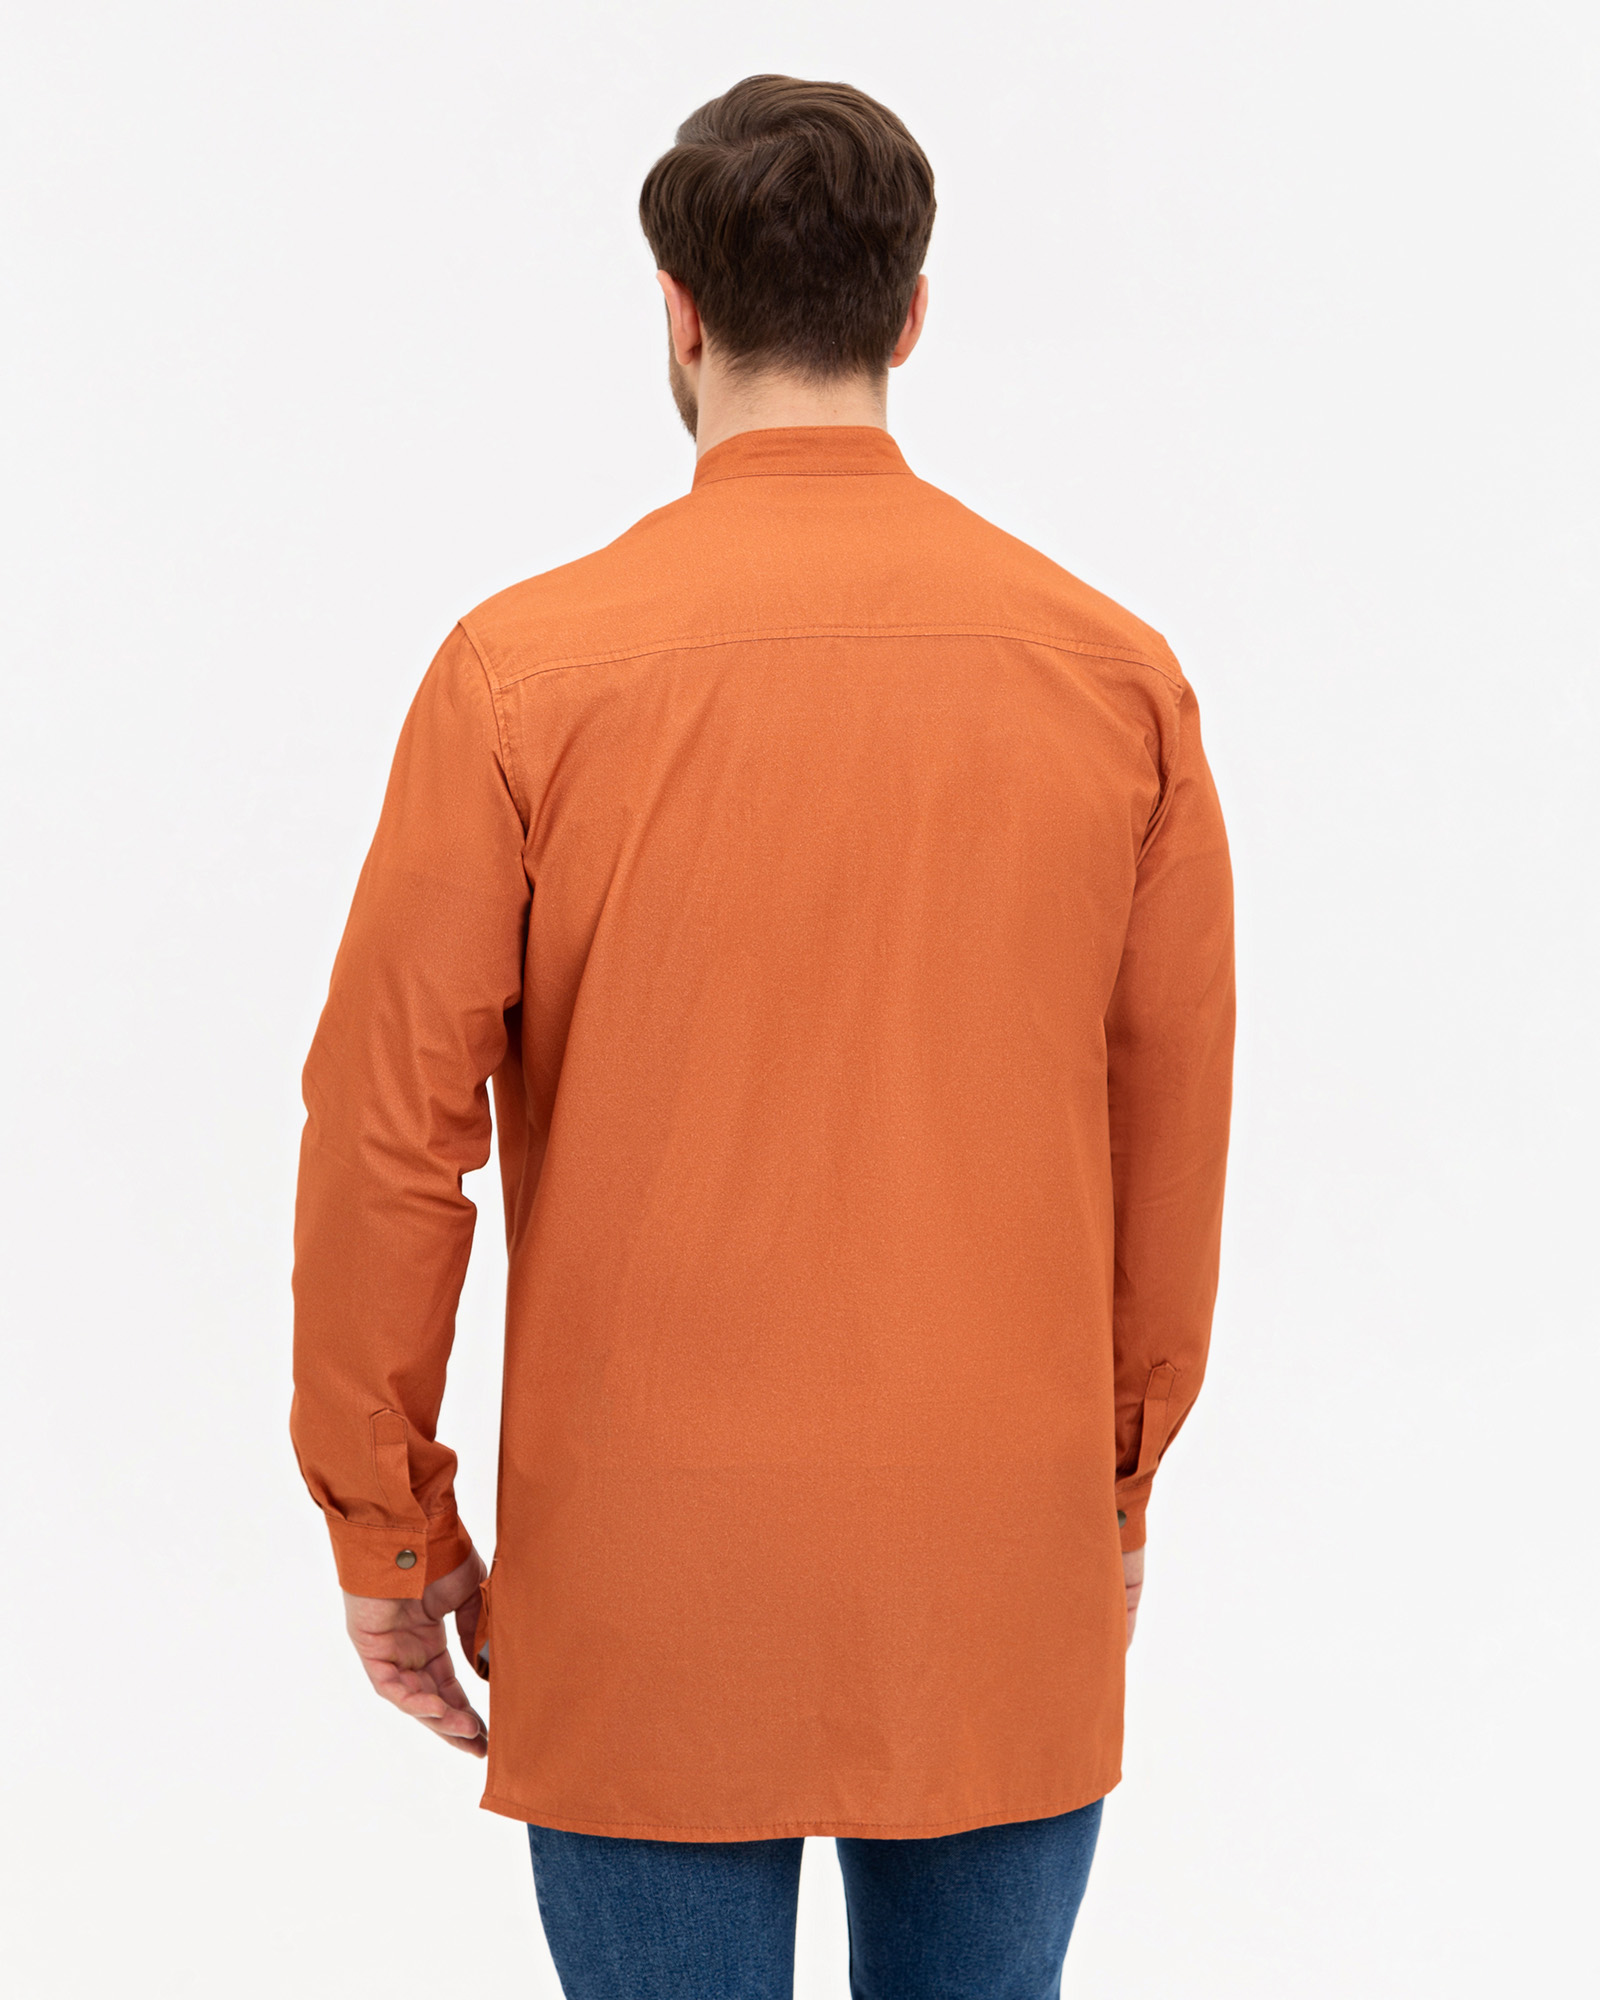 Рубашка для официанта, в оранжевом цвете - фото 2